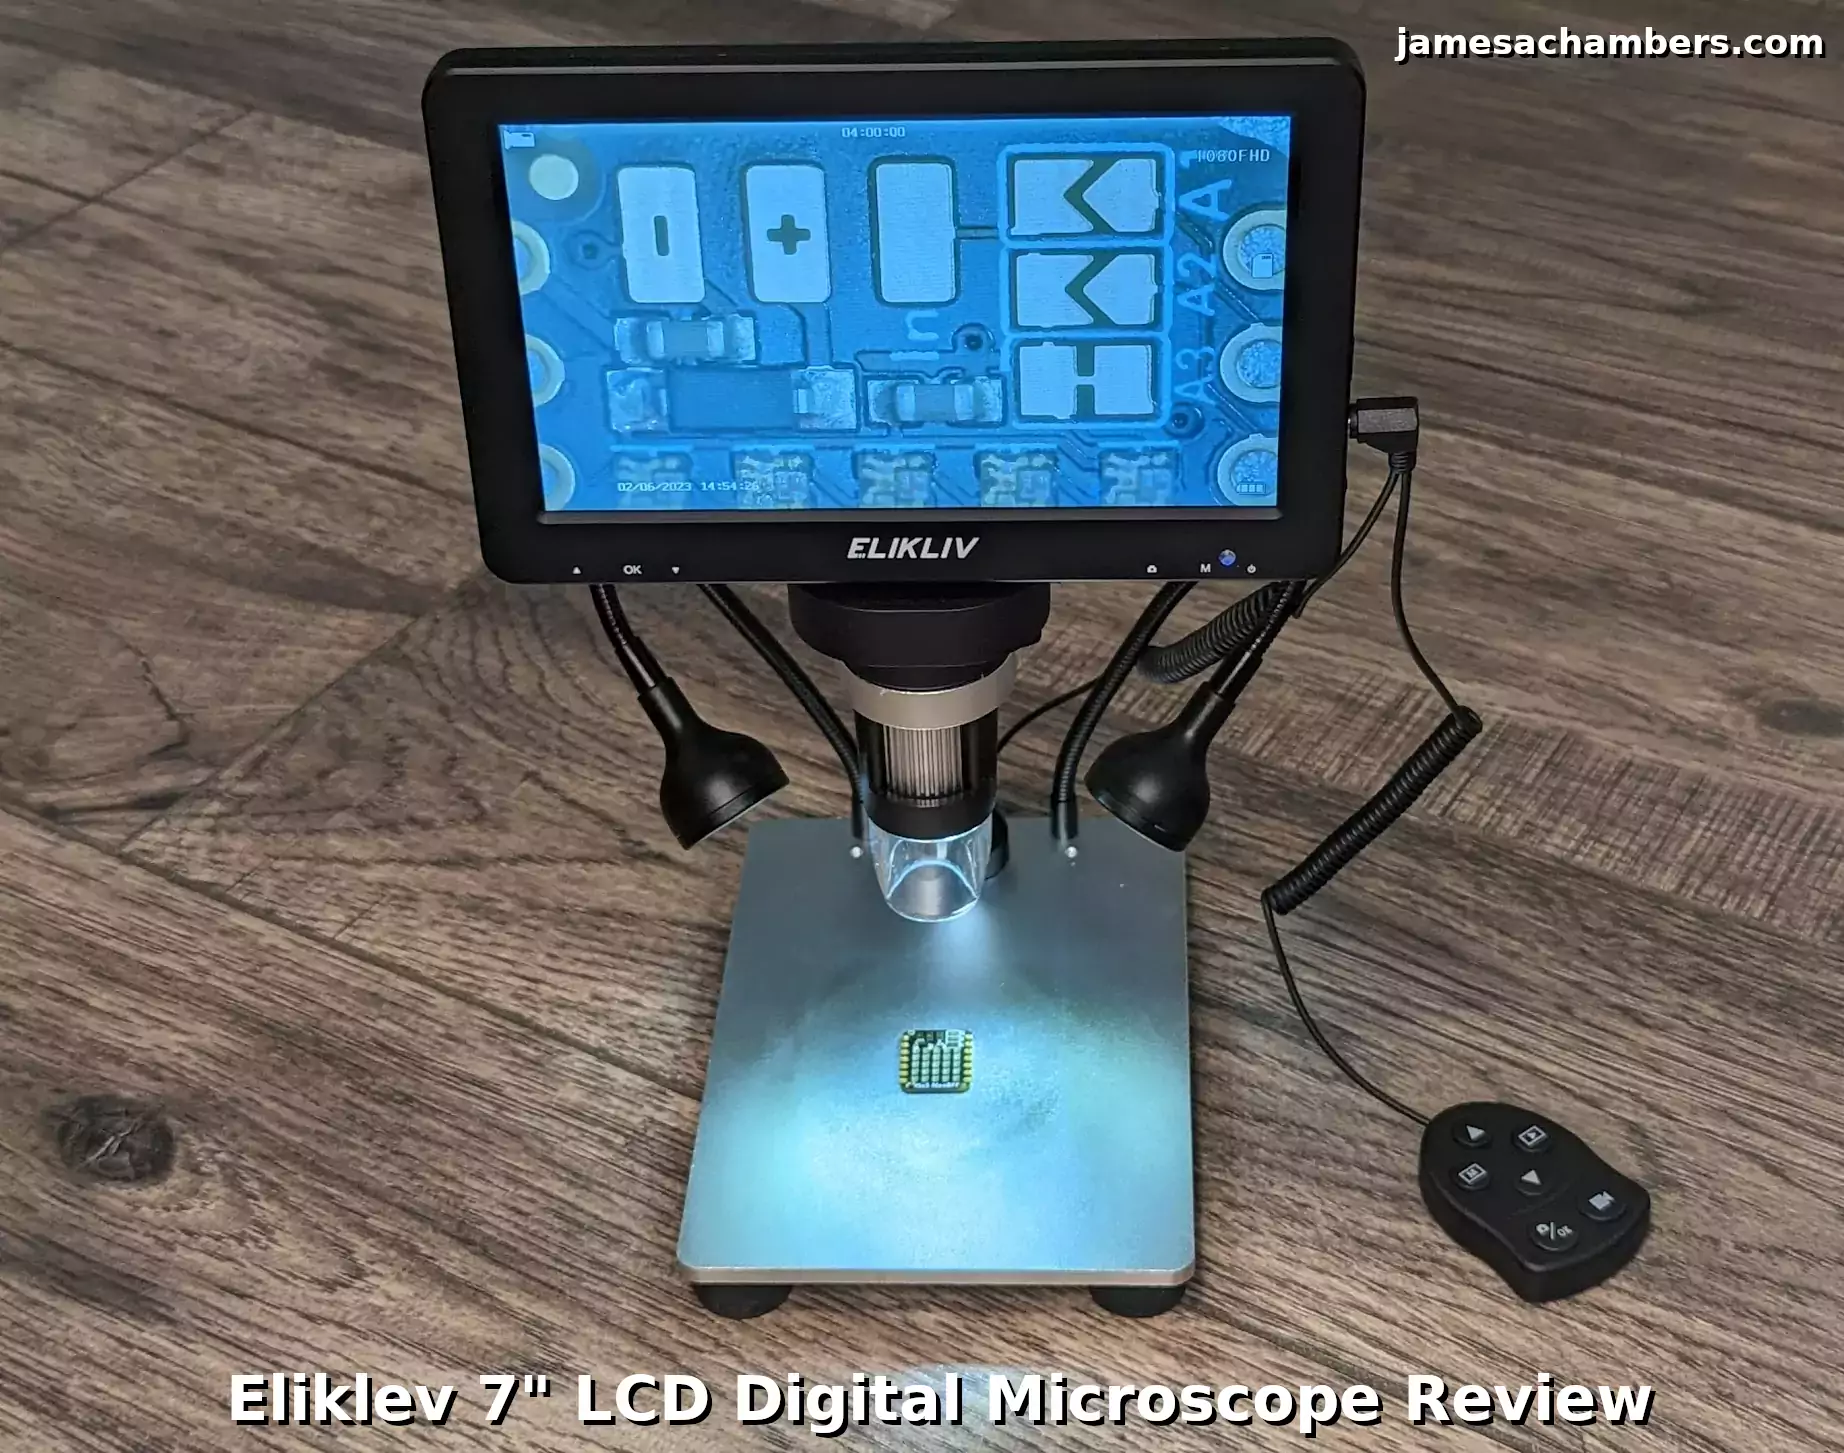 Elikliv 7" LCD Digital Microscope Review